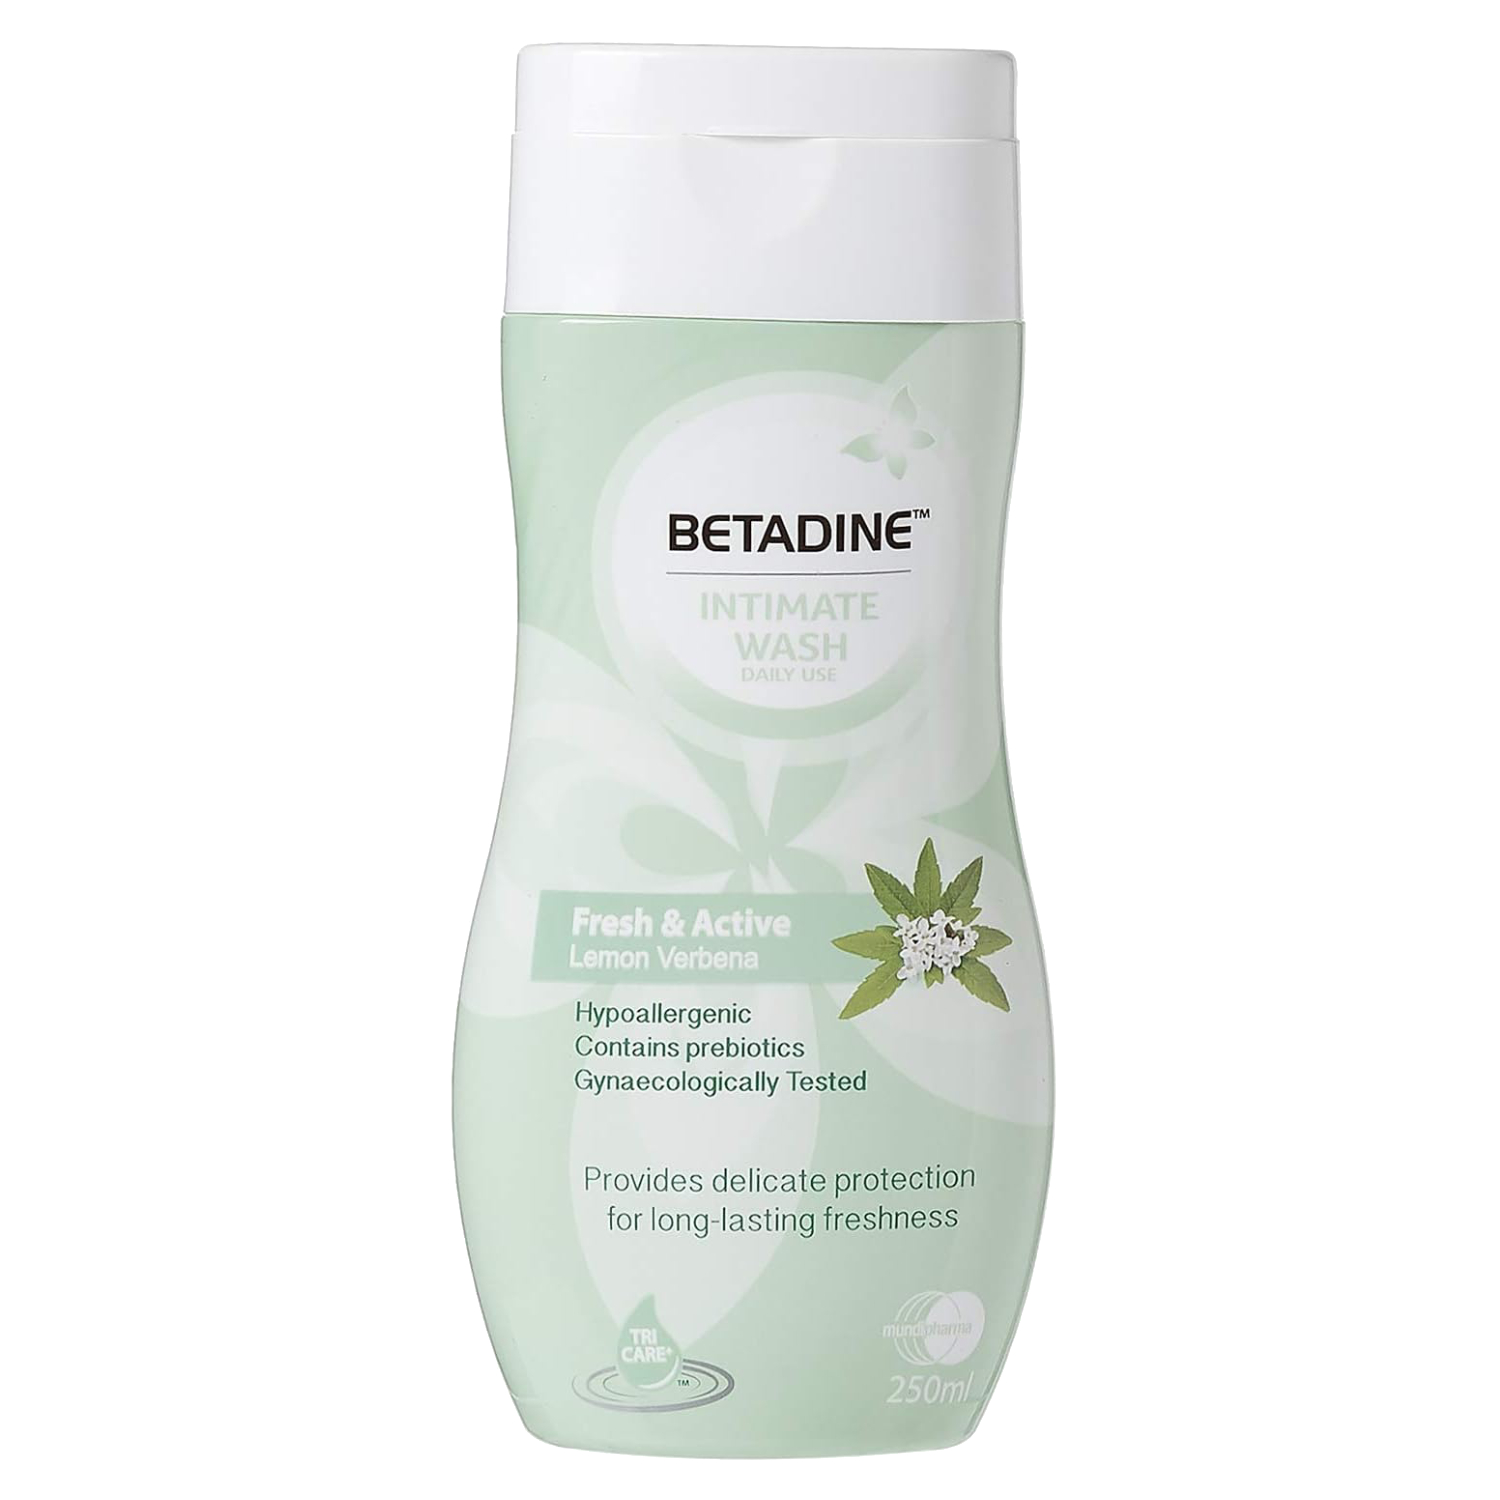 Product Image for Betadine Intimate Wash 300ml